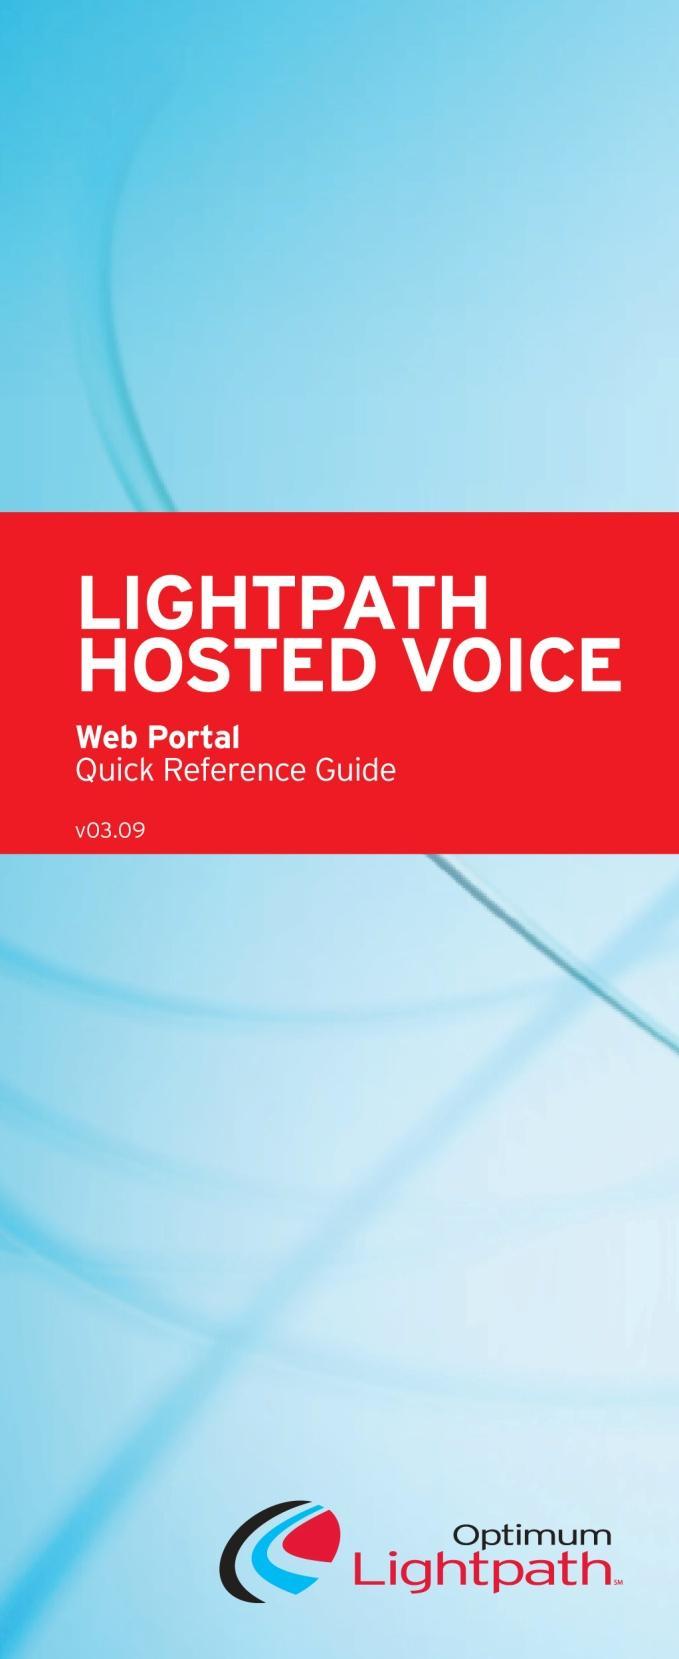 V0610 Logging Into the Web Portal Open your Web browser application. In the address field, enter the external WebPortal address, https://lightpathvoice.com Click Go.